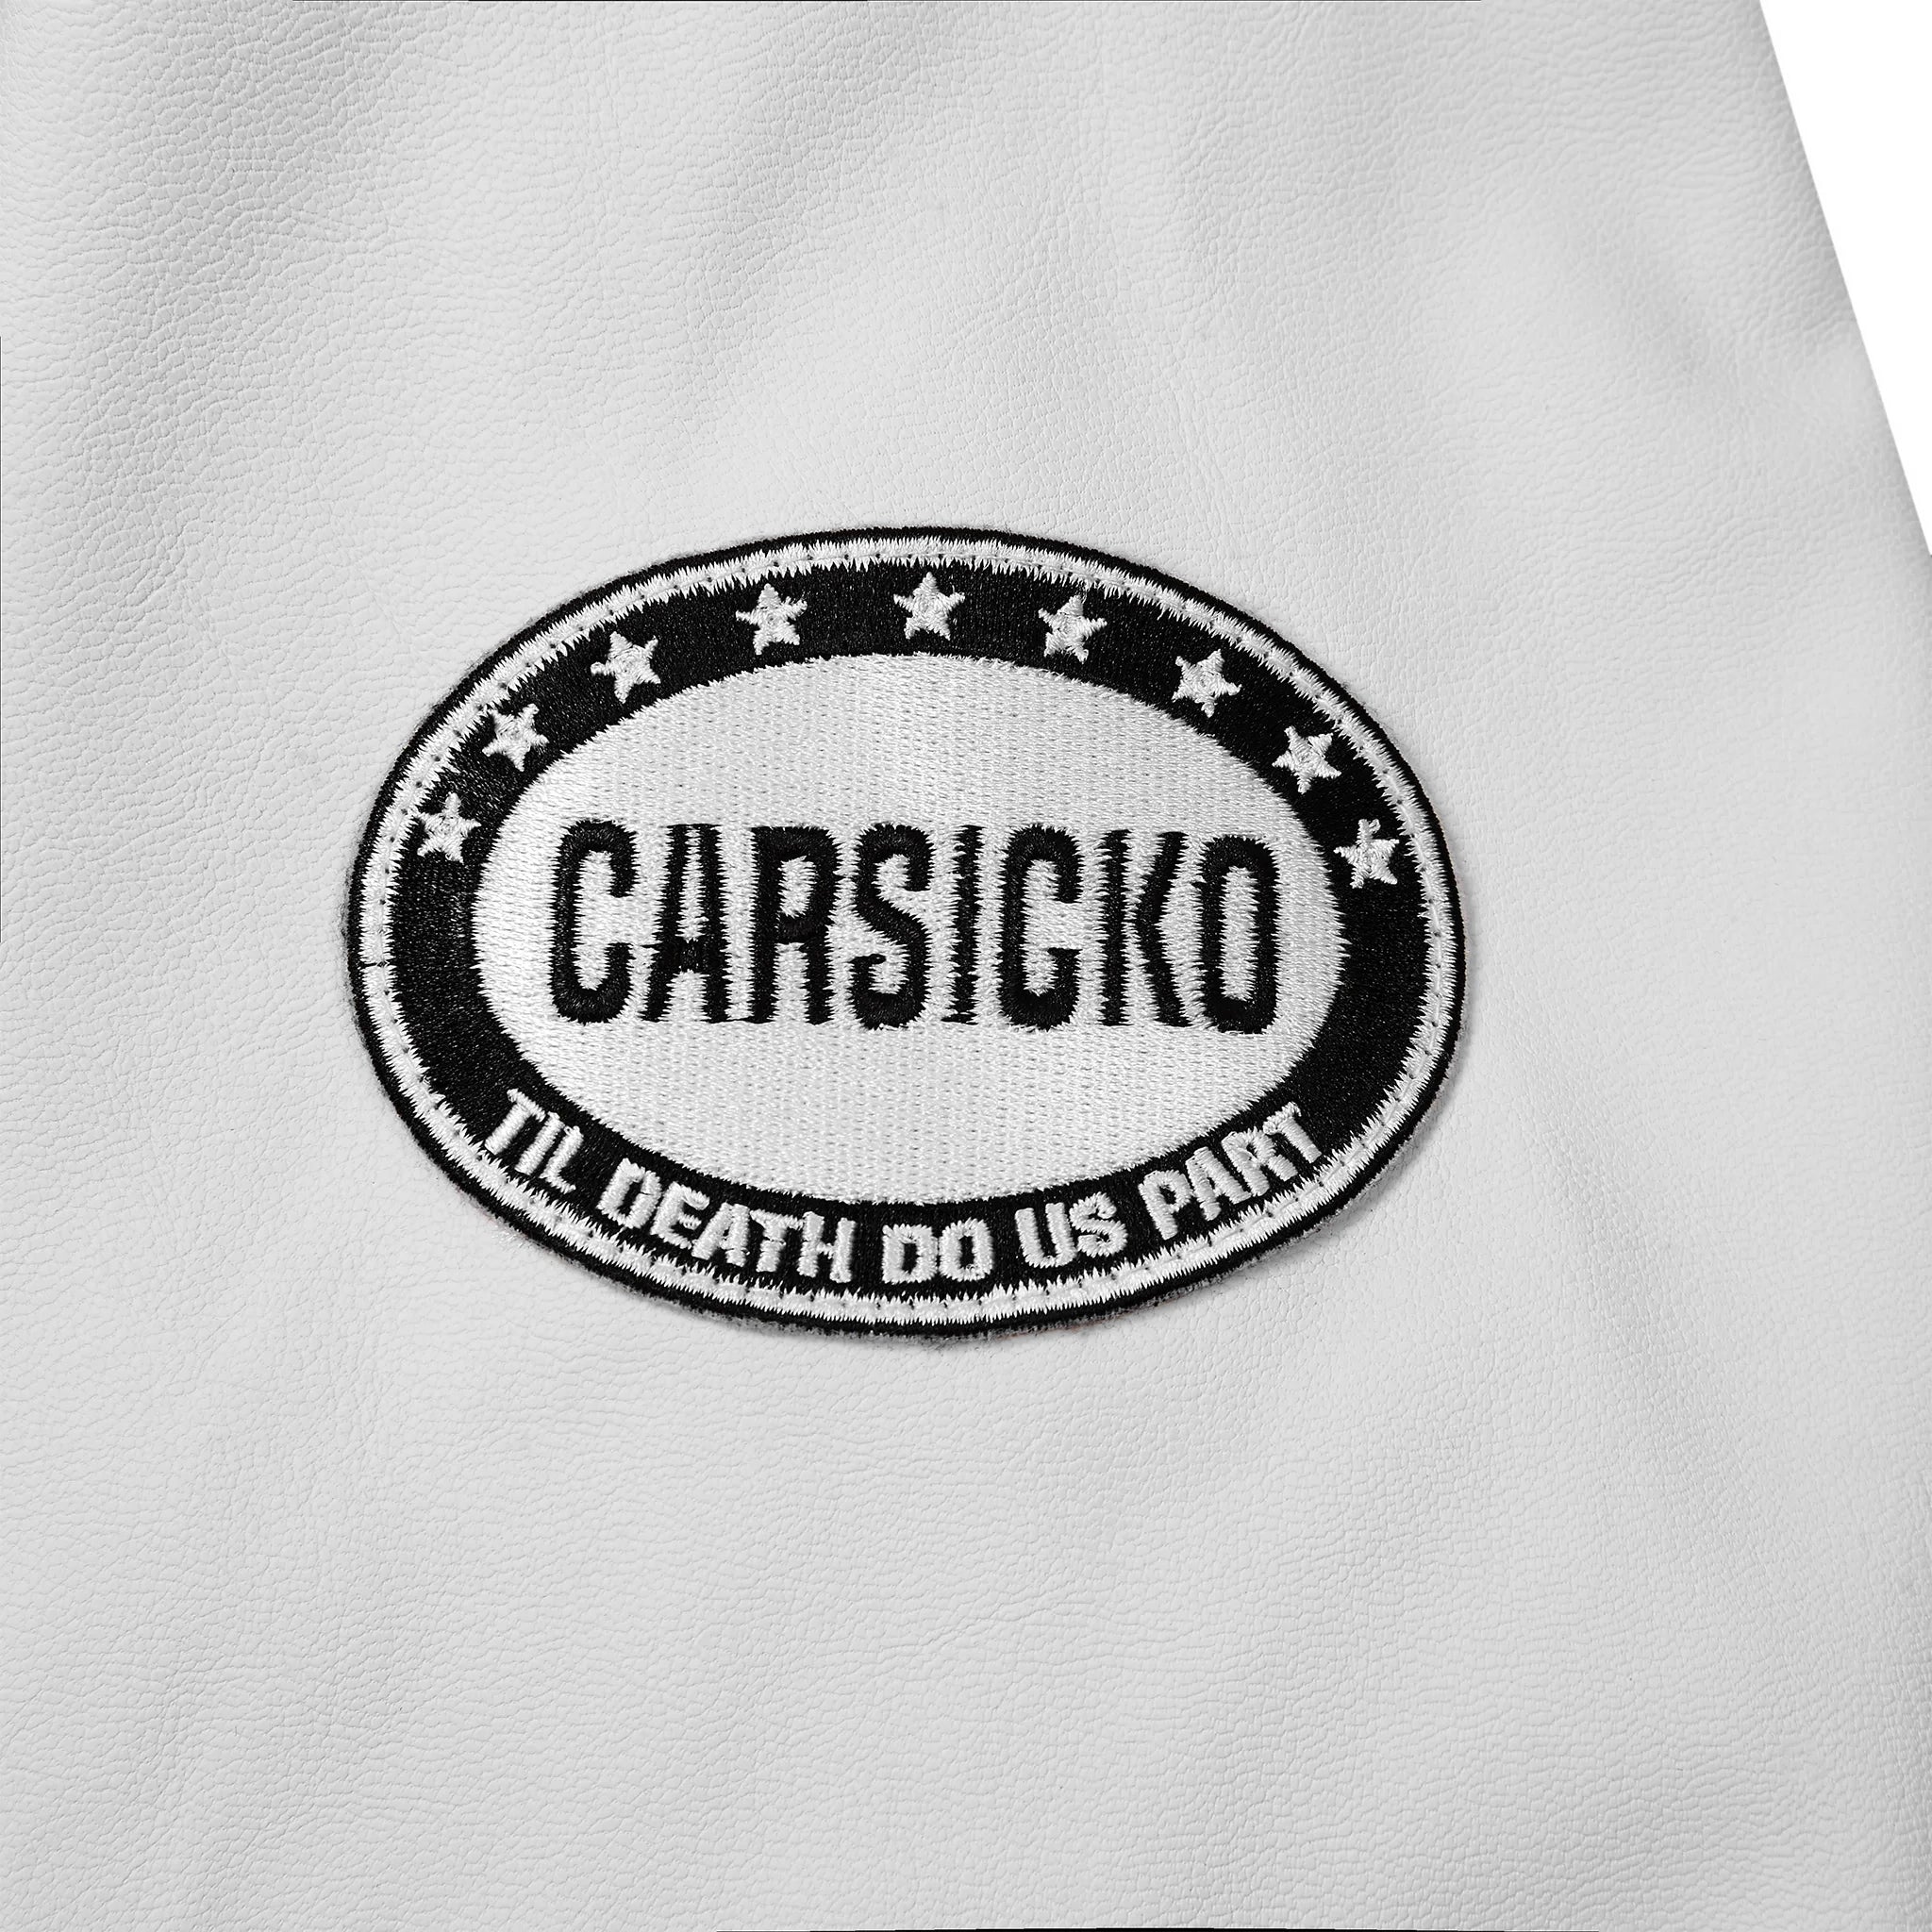 Carsicko Racing Club Black Varsity Jacket